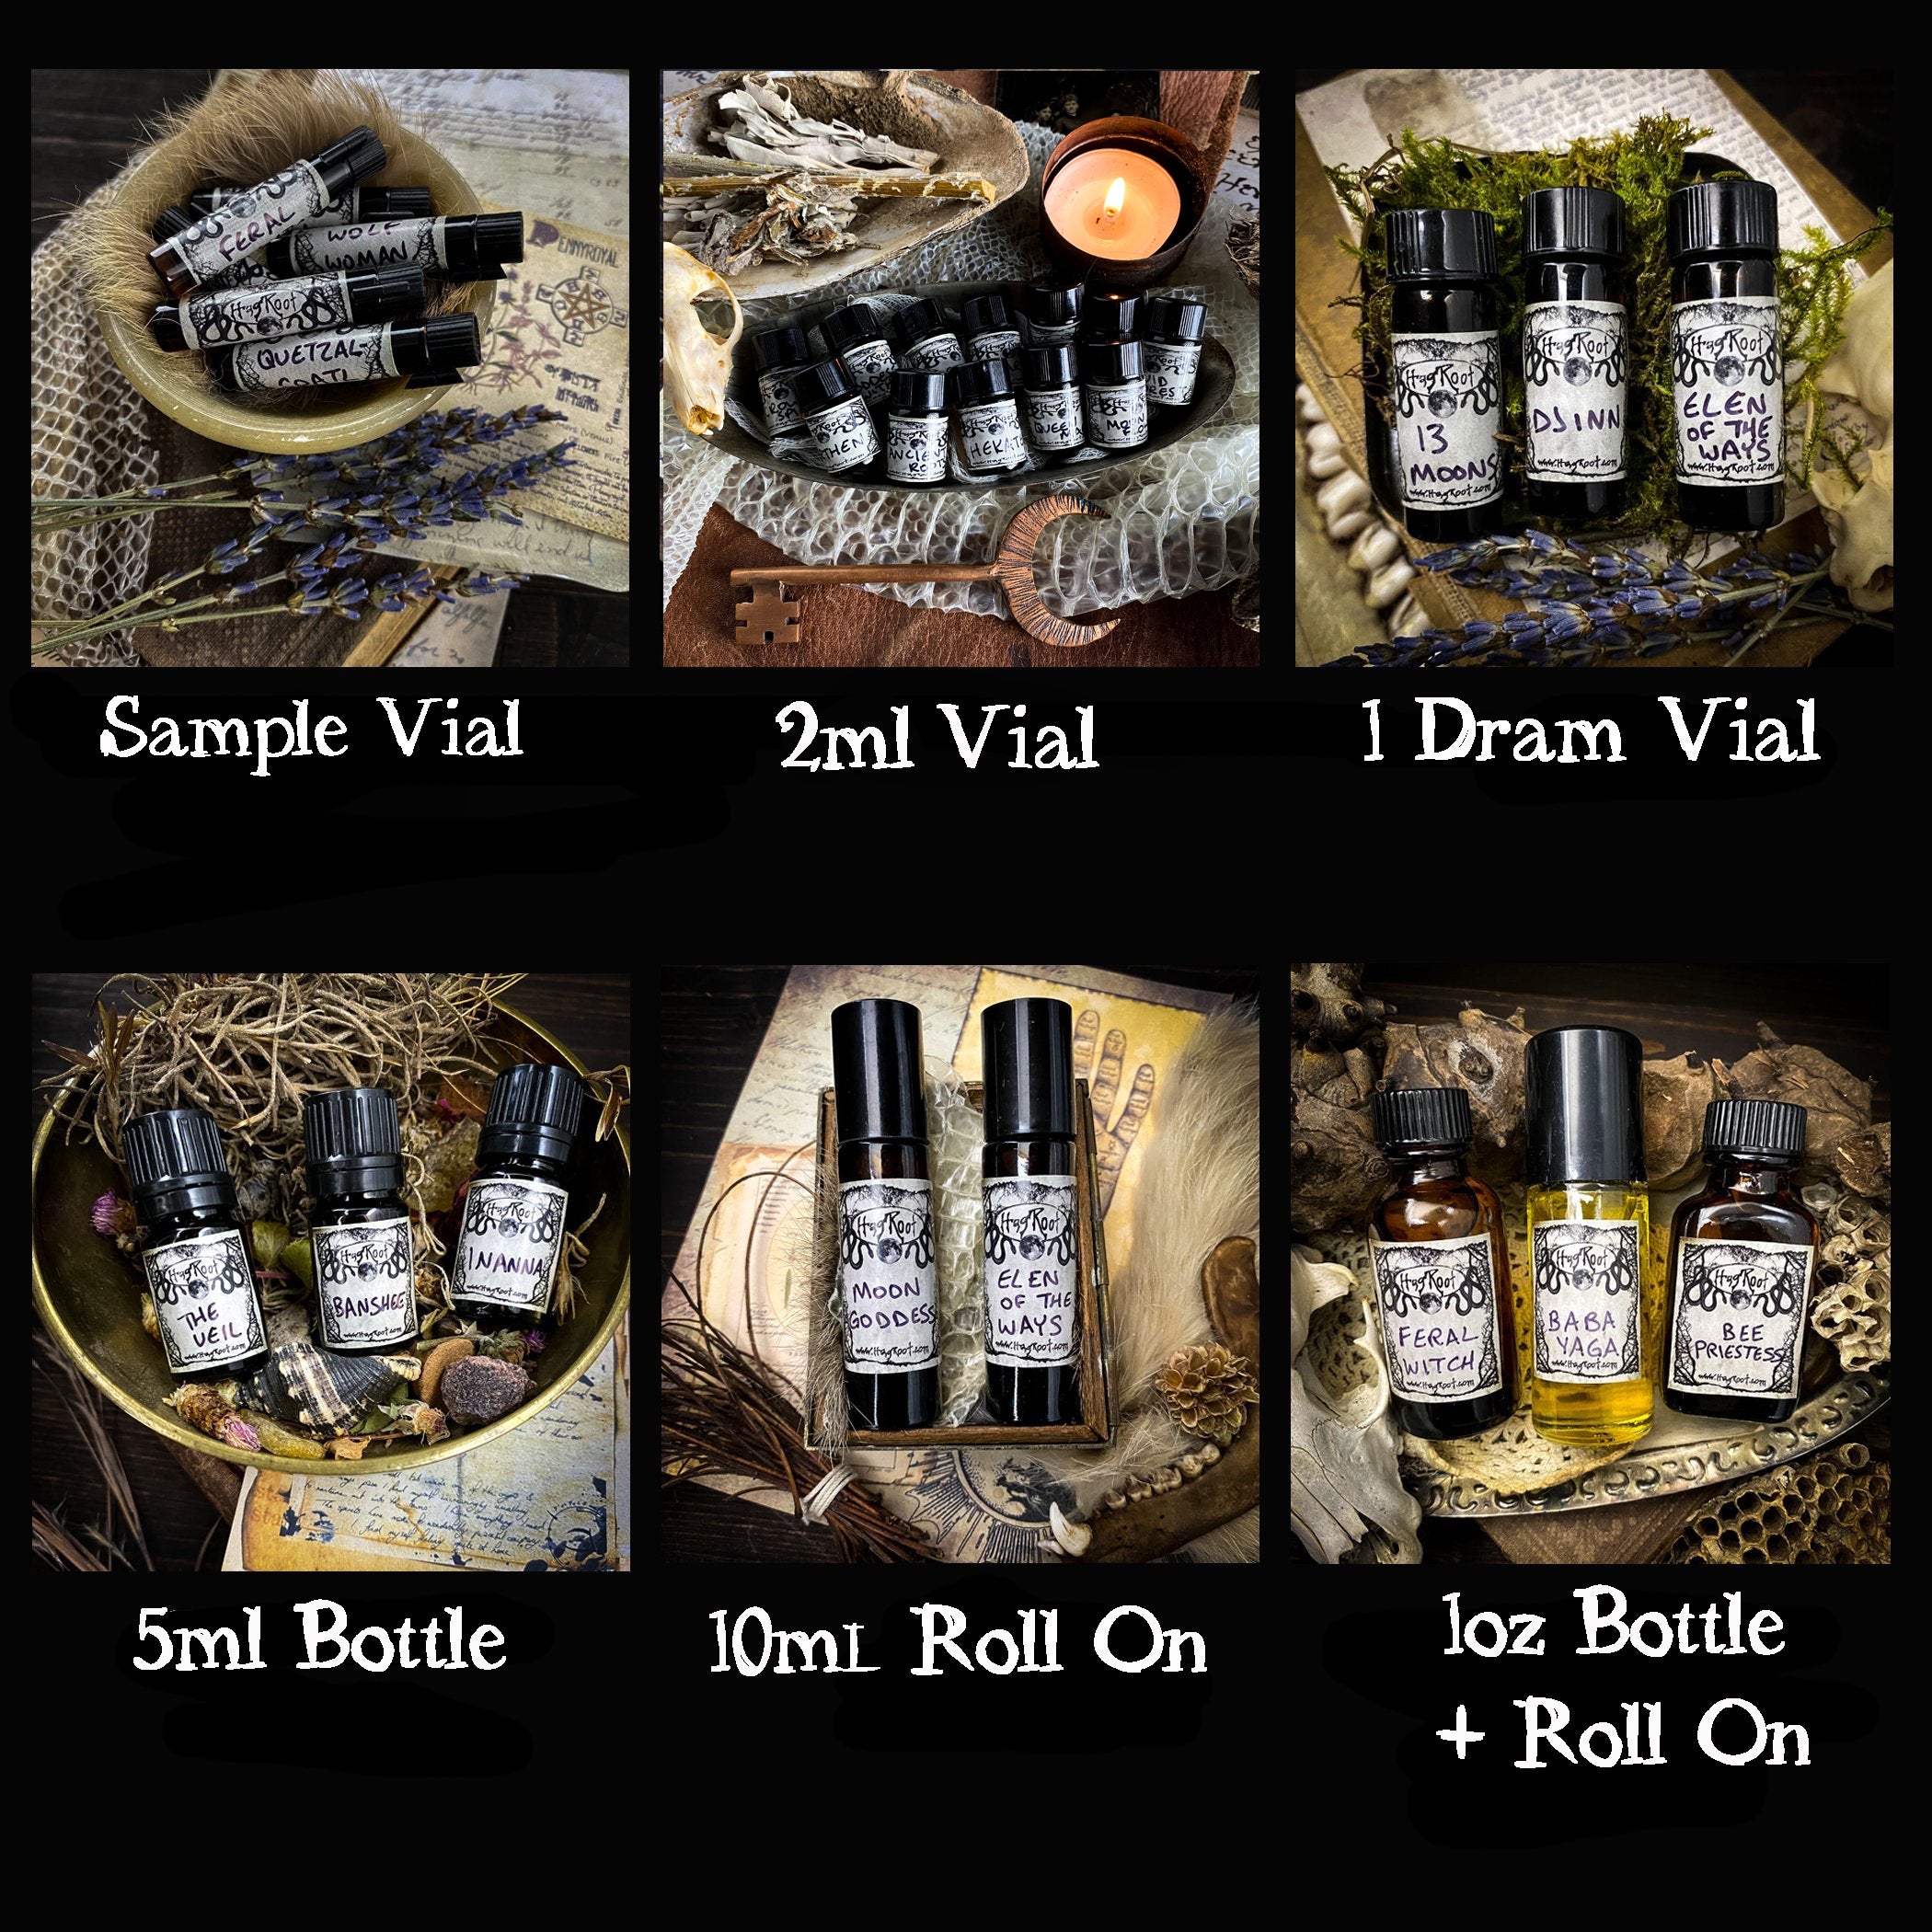 VISHNU-(Cedar, Amber, Musk, Patchouli, Cypress, Palo Santo)-Perfume, Cologne, Anointing, Ritual Oil